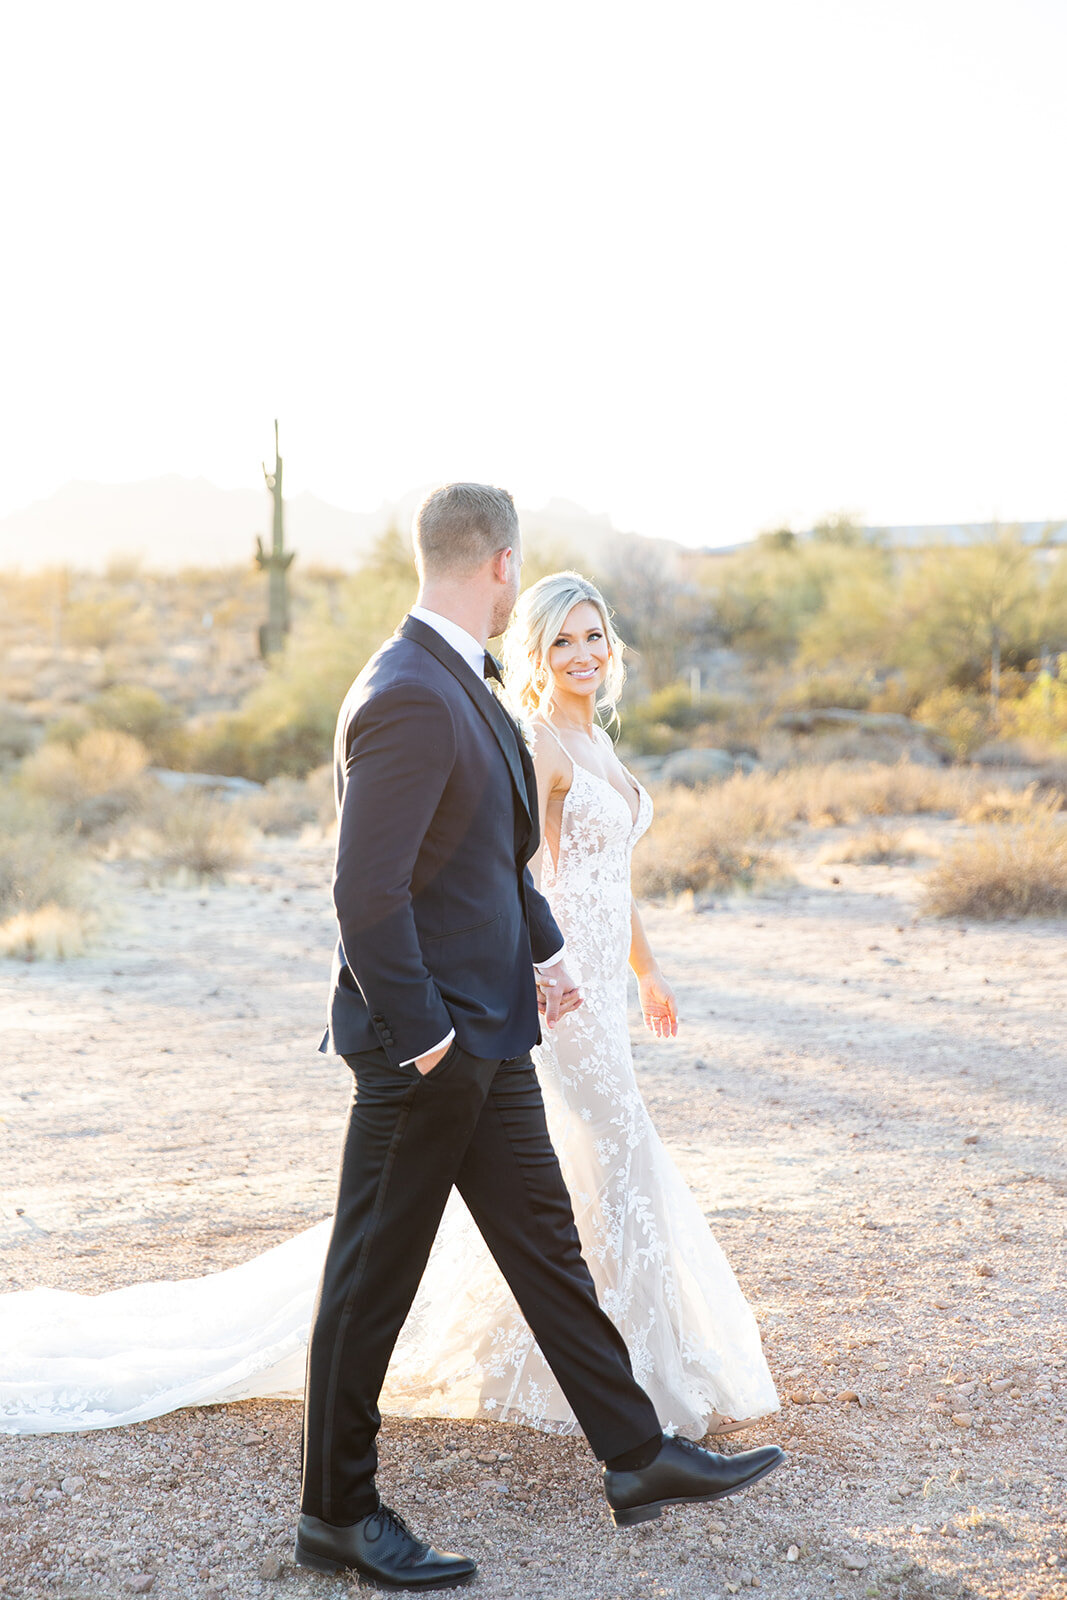 Karlie Colleen Photography - Ashley & Grant Wedding - The Paseo - Phoenix Arizona-801